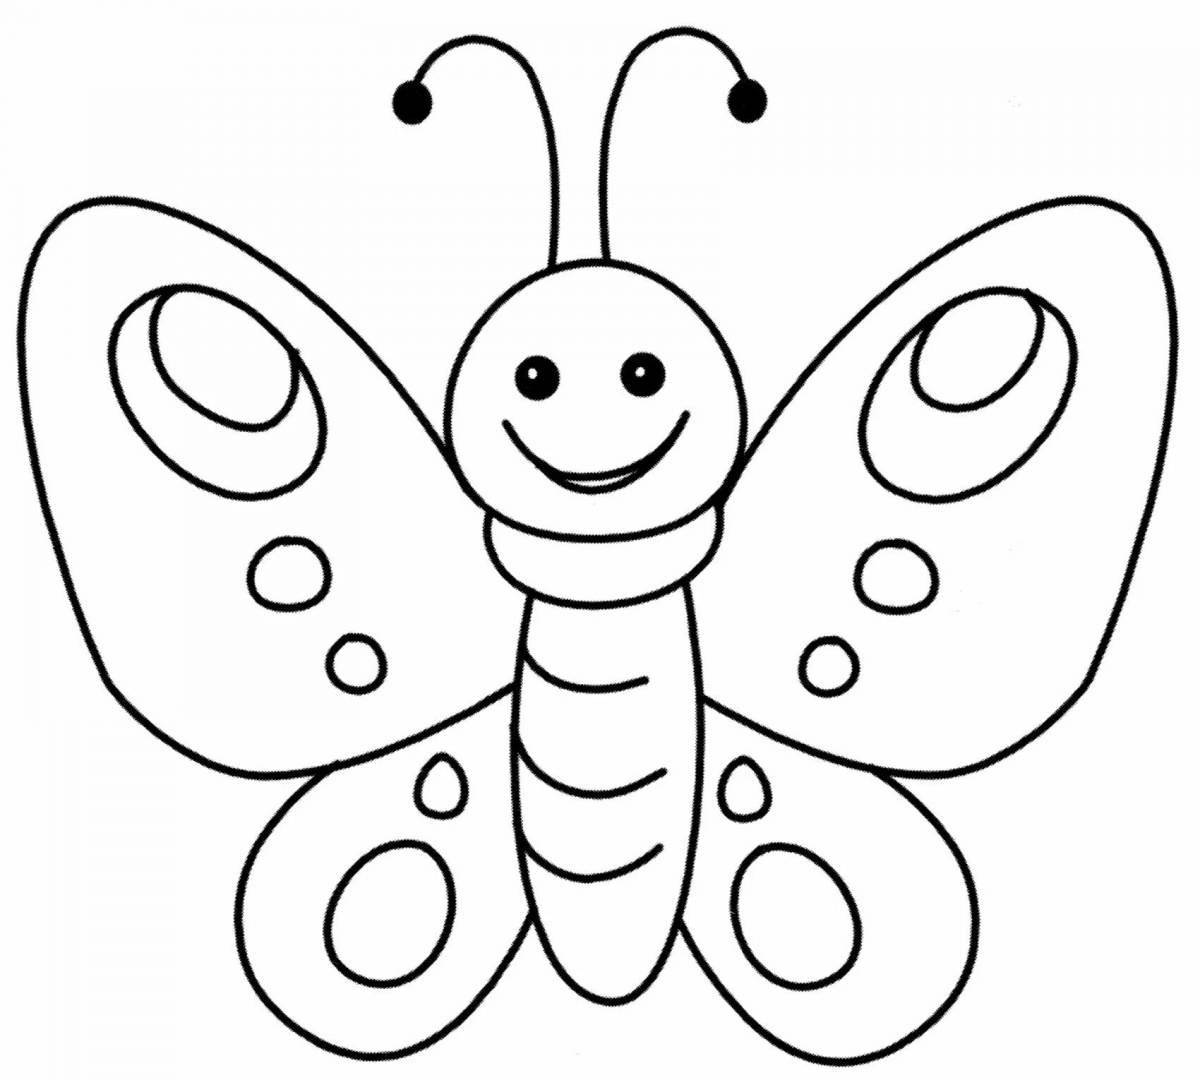 Раскраска яркая бабочка для детей